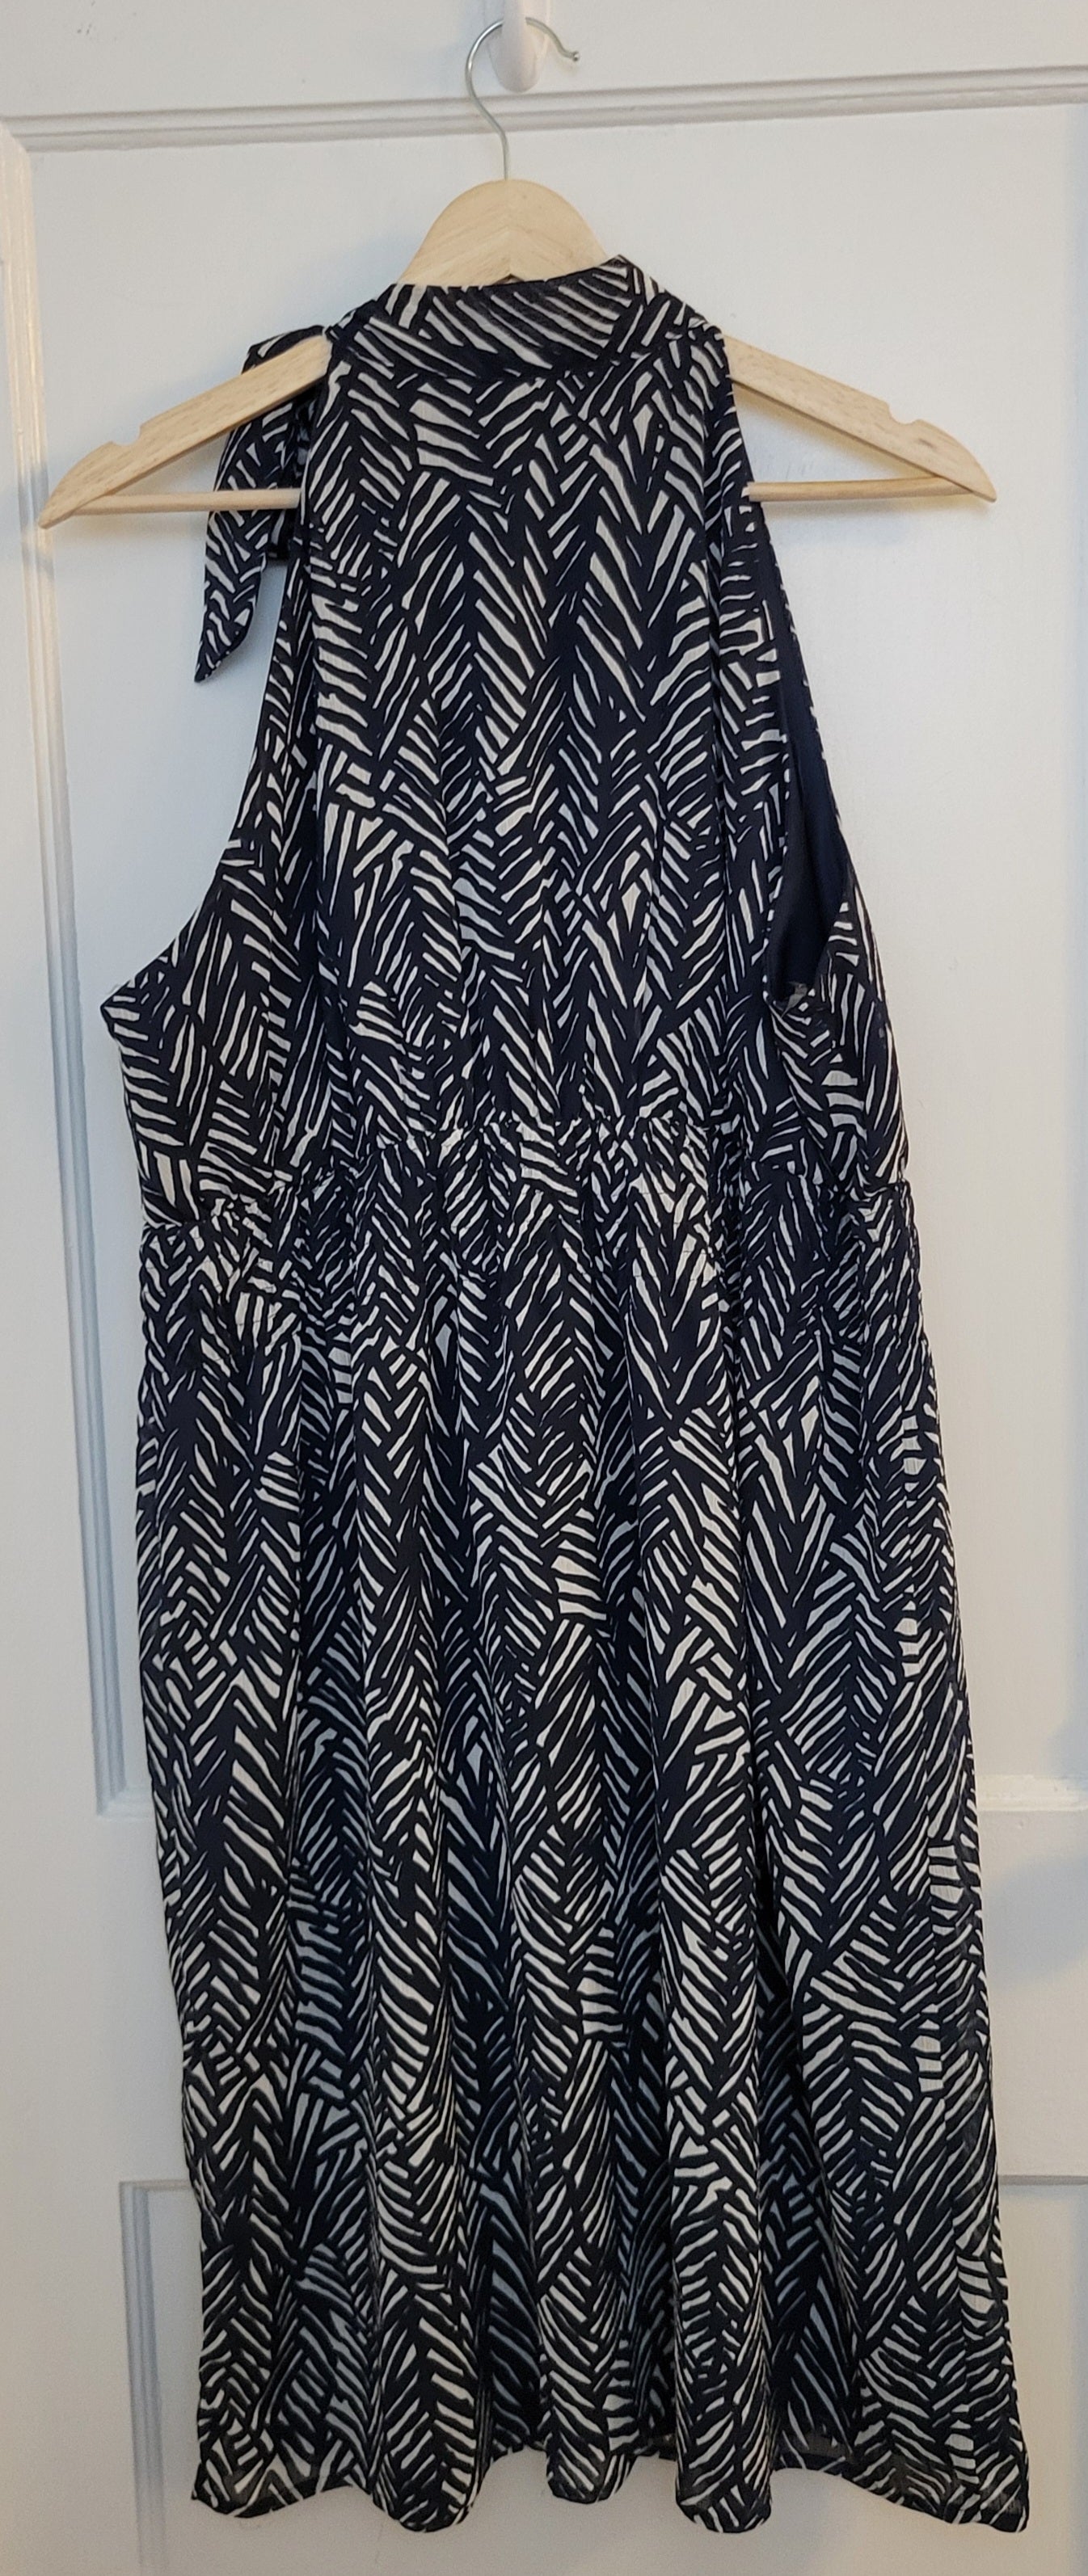 Merona (Target) Navy Blue and White Tie Neck Halter Dress, Women's Size XL